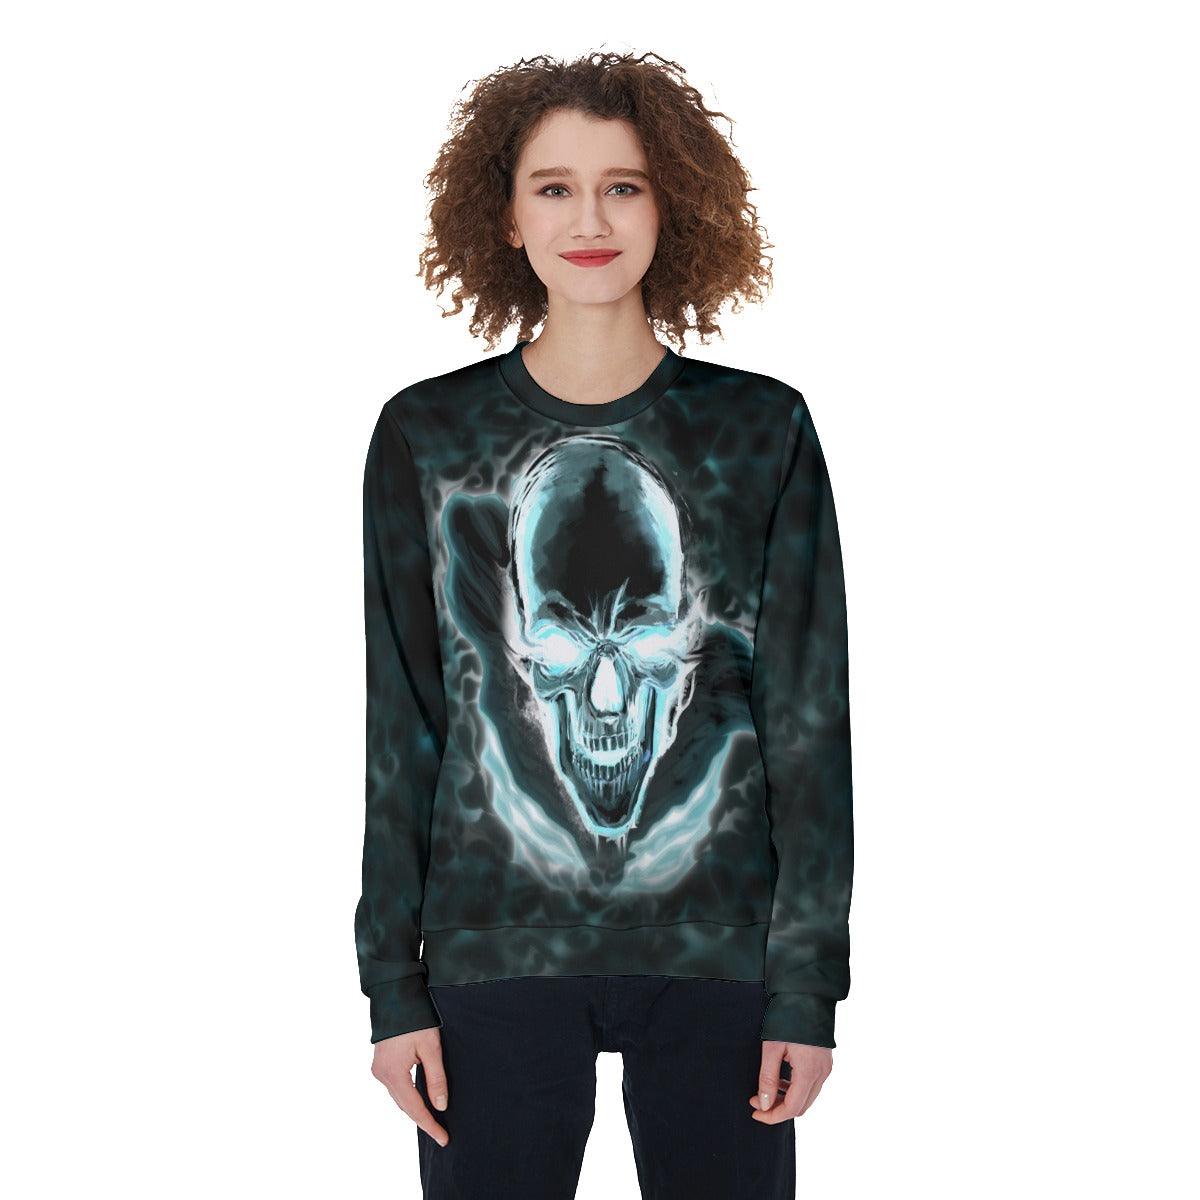 Glowing Skull In The Dark Heavy Fleece Sweatshirt - Wonder Skull